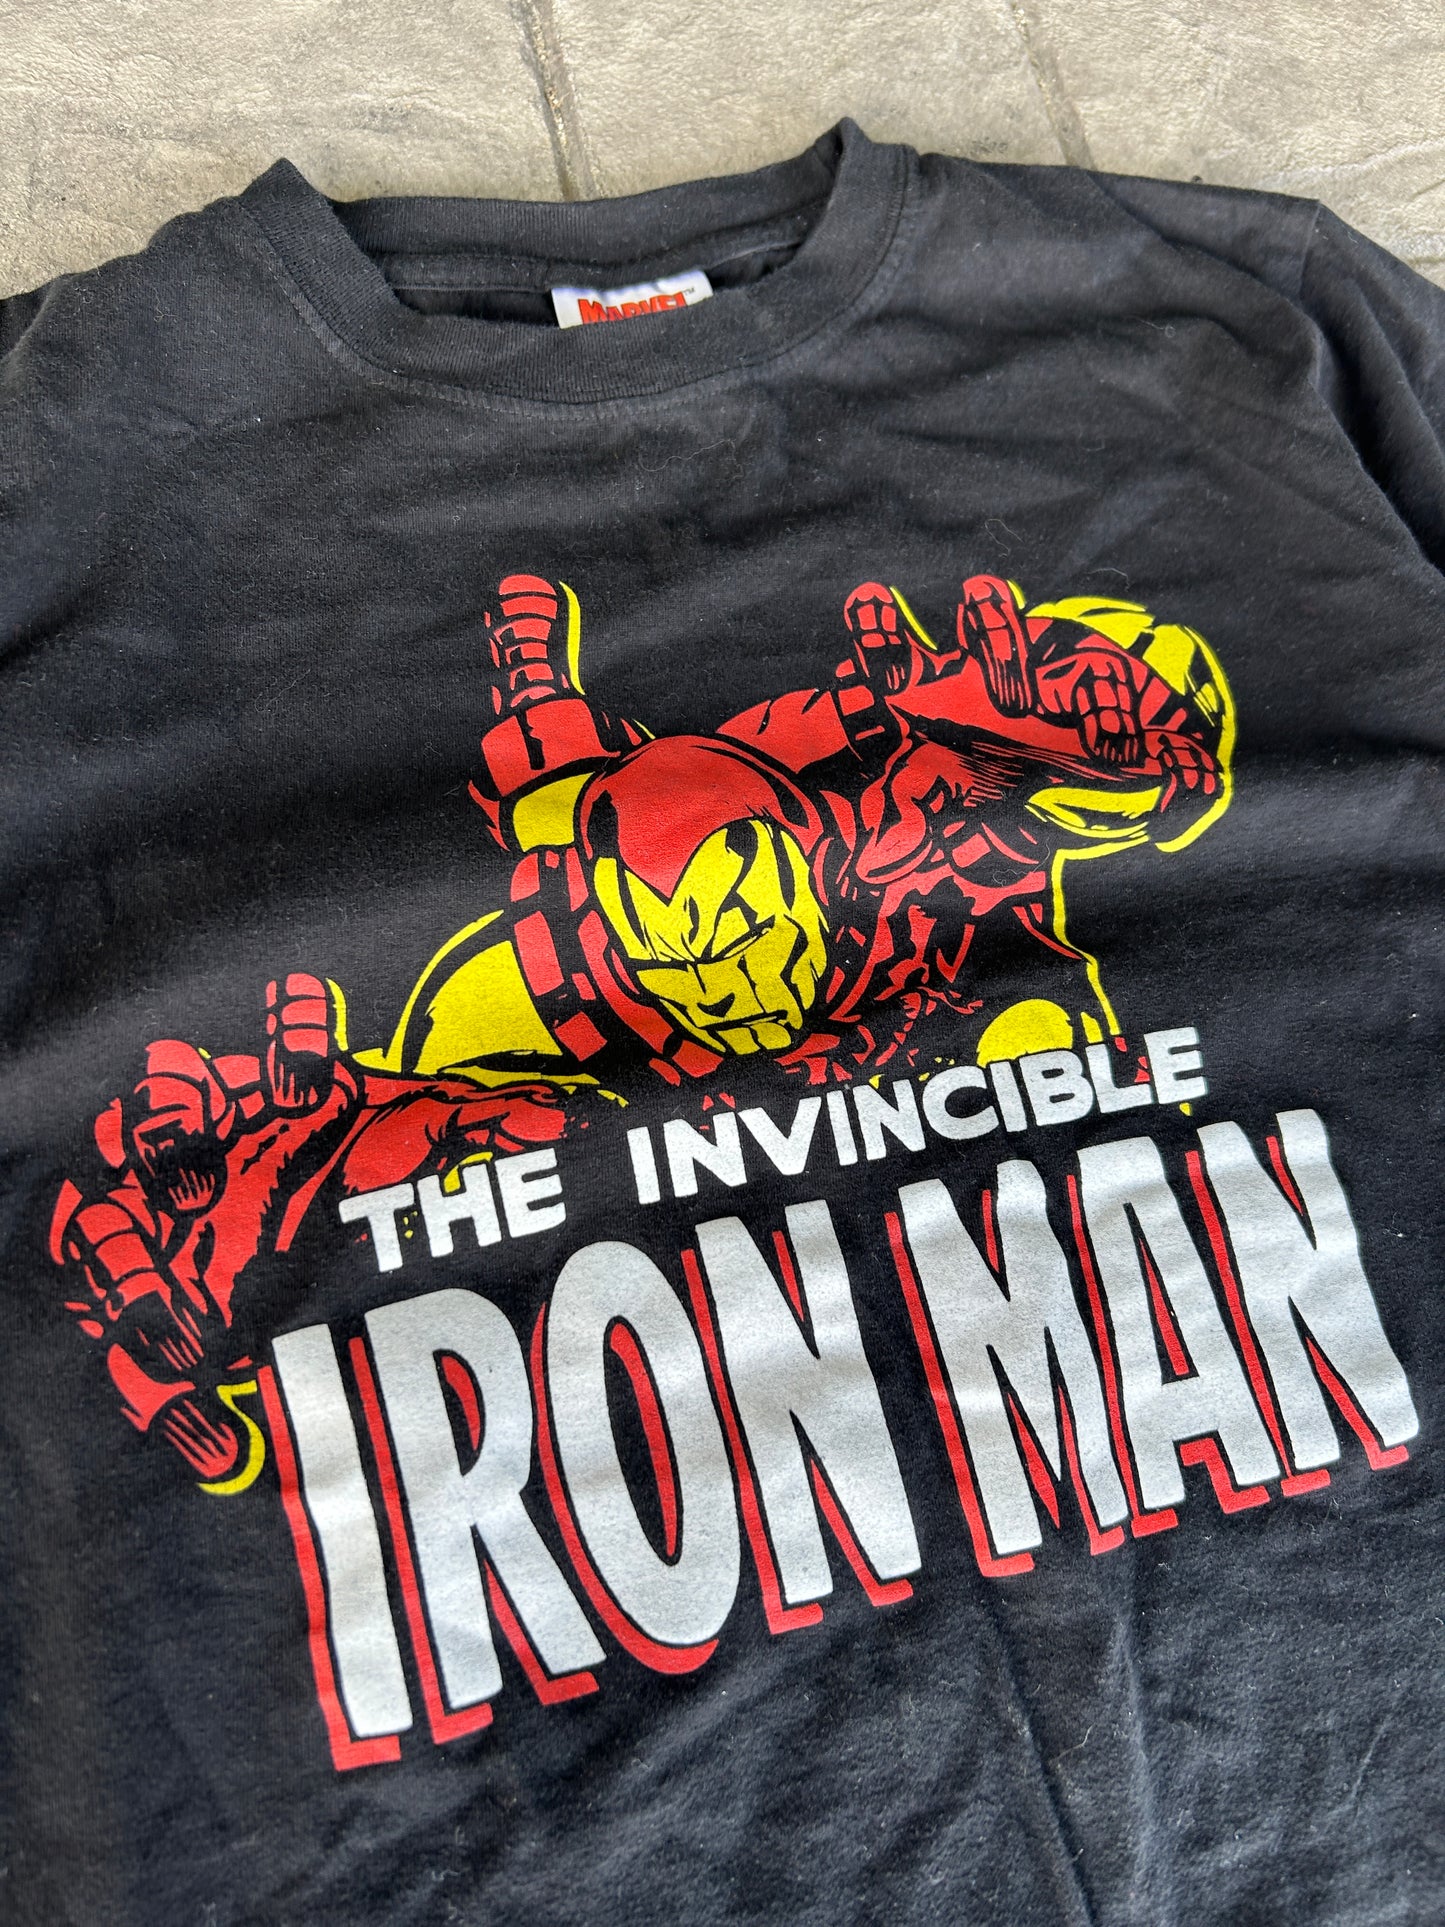 Vintage 2009 Invincible Ironman Tee (M)